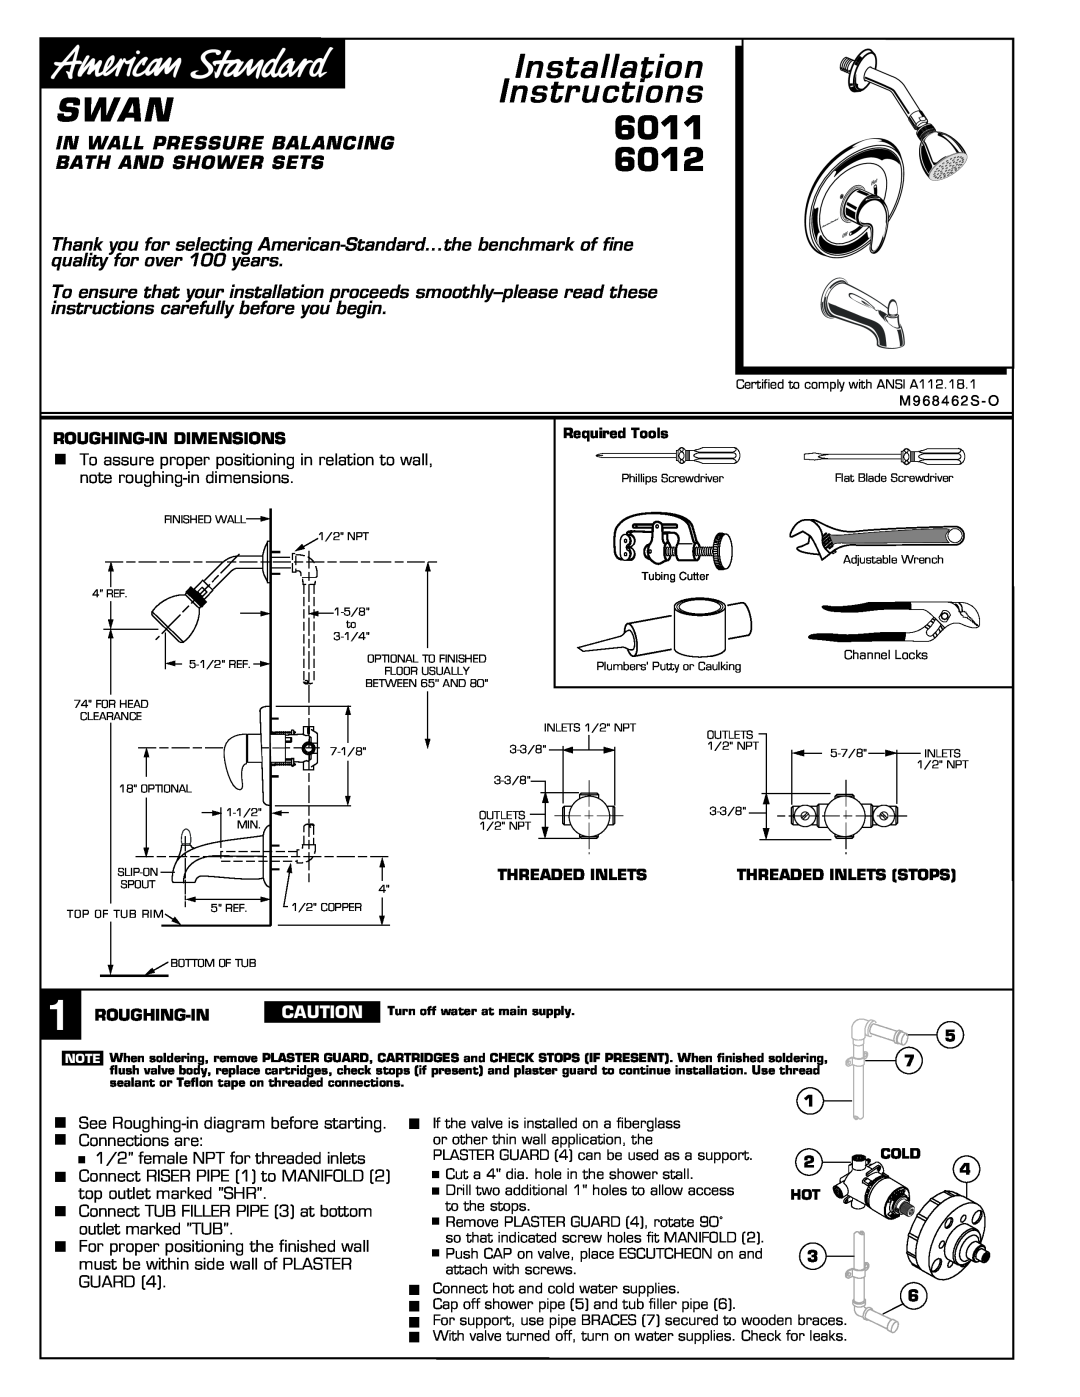 American Standard 6012 installation instructions Installation, Swan, Instructions, 6011, In Wall Pressure Balancing 